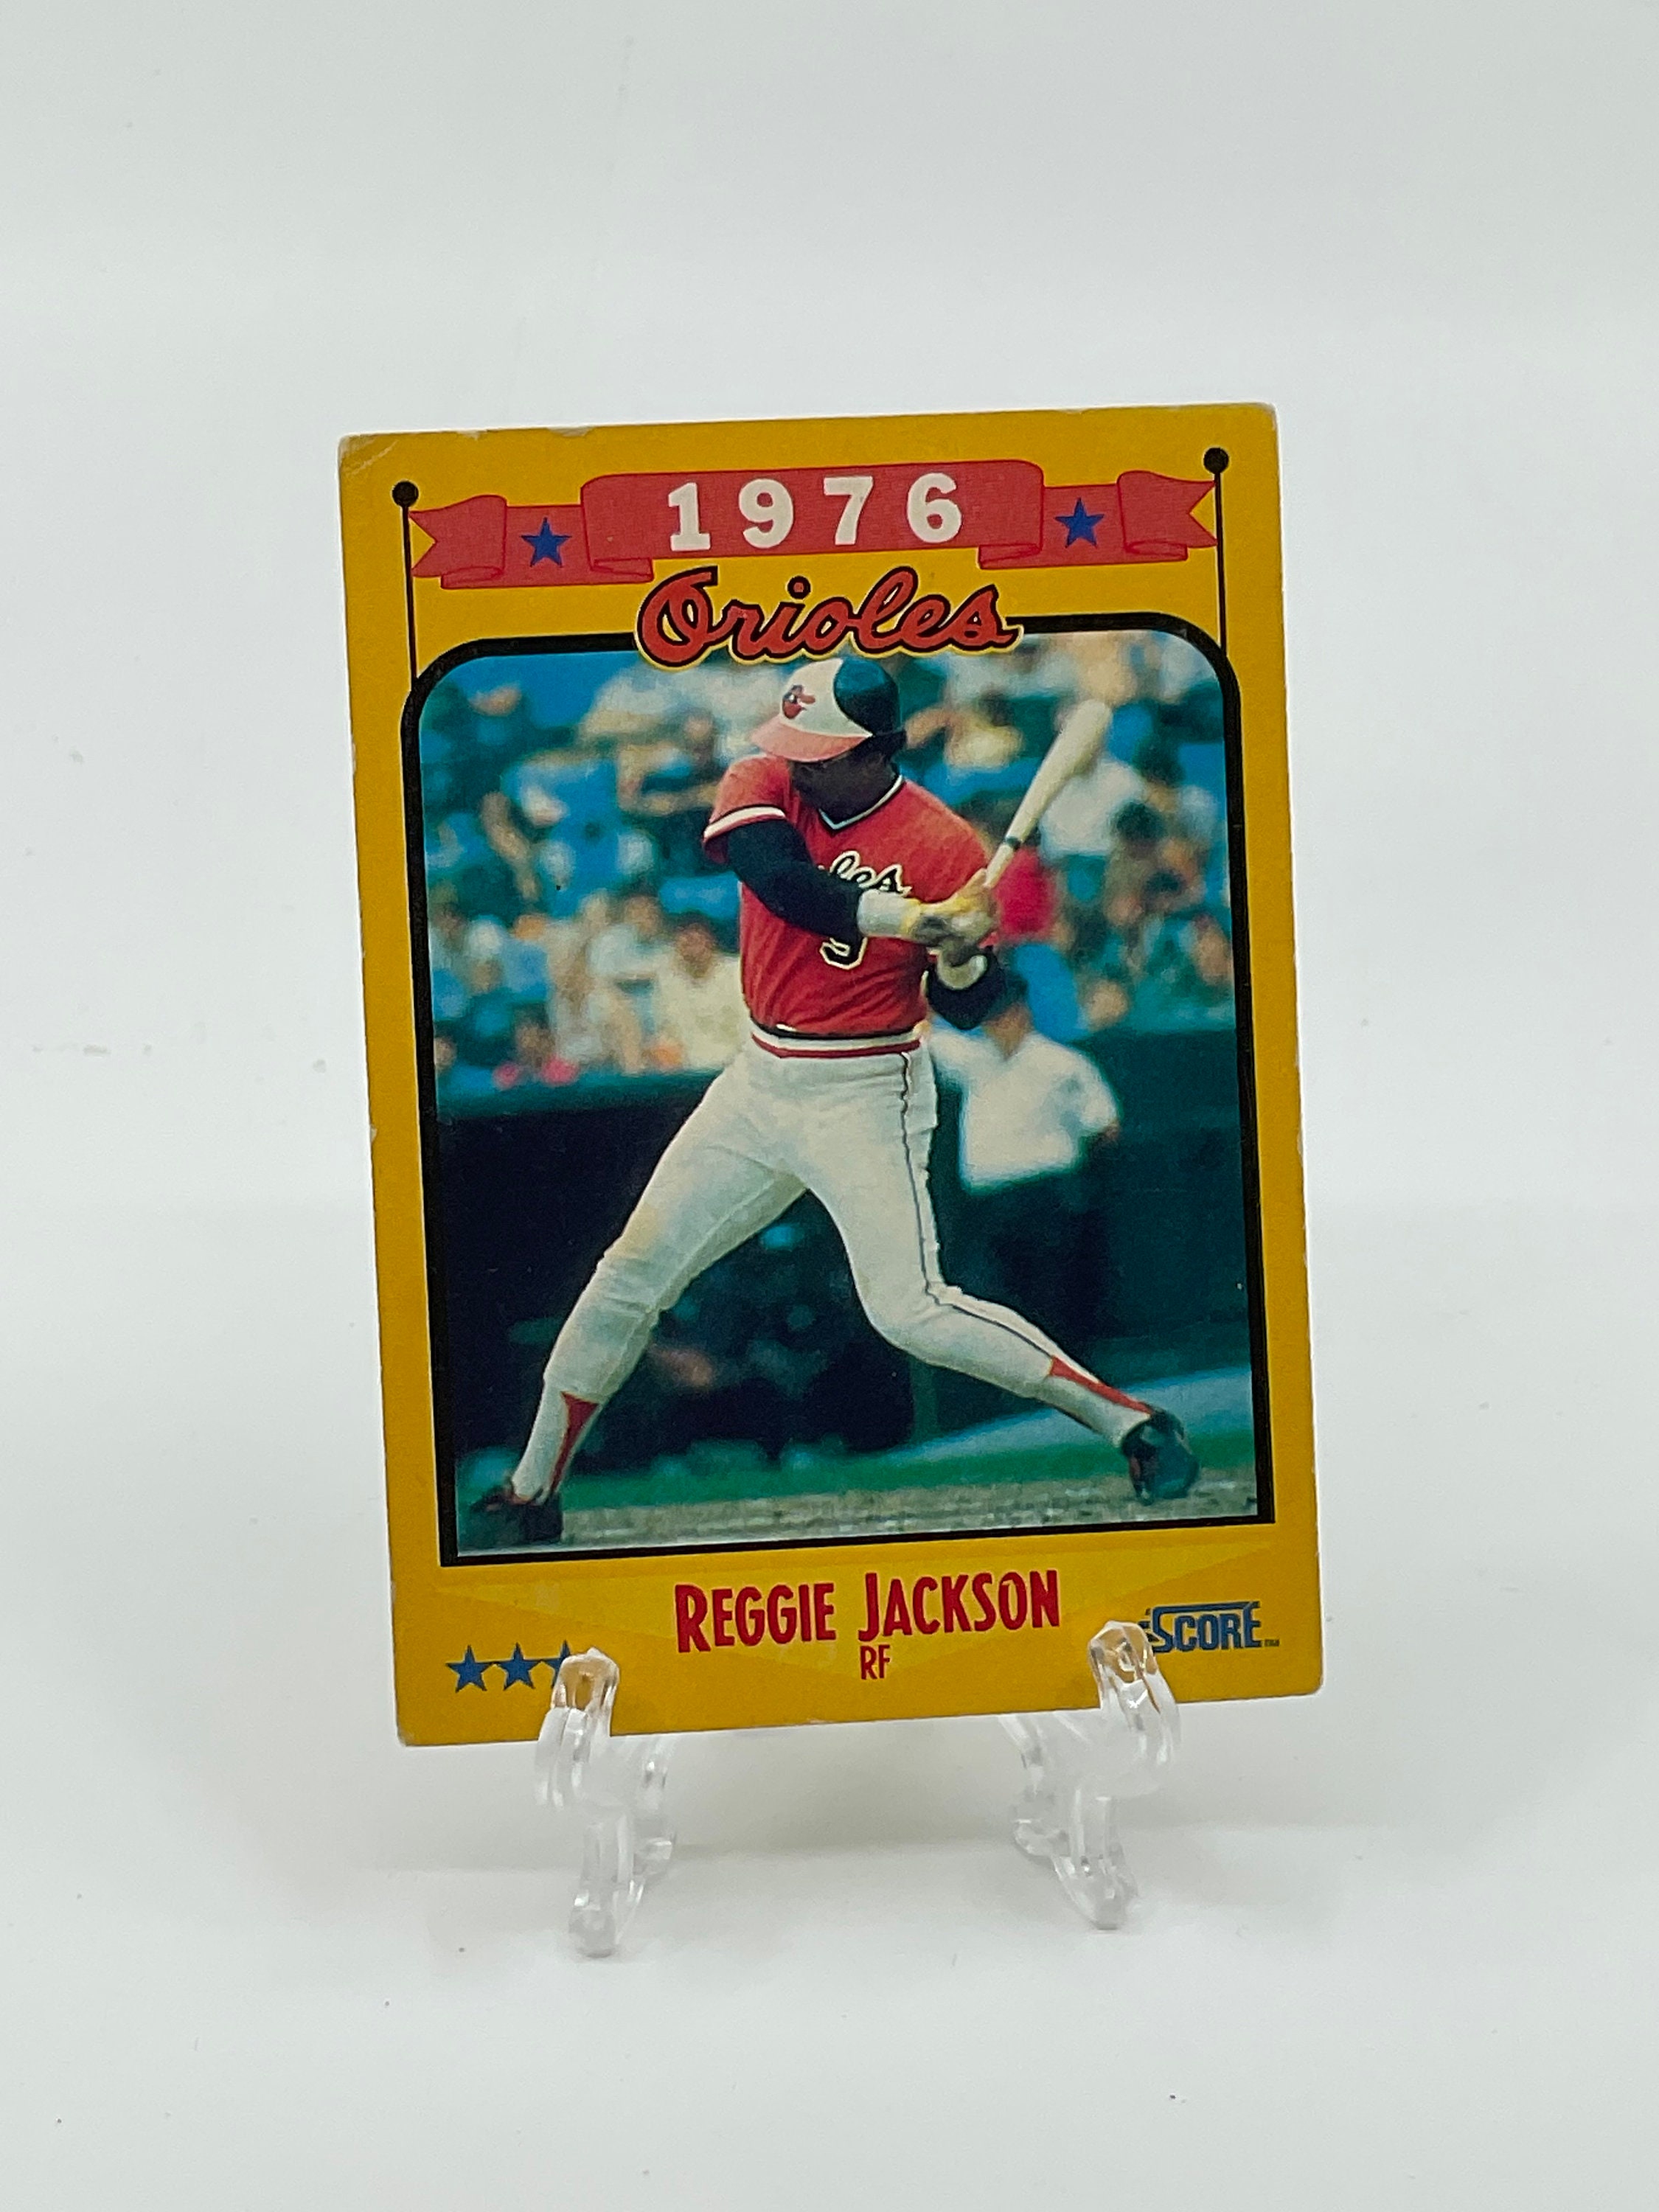 1977 Topps REGGIE JACKSON Wearing Orioles Uniform Baseball REPRINT Card #10